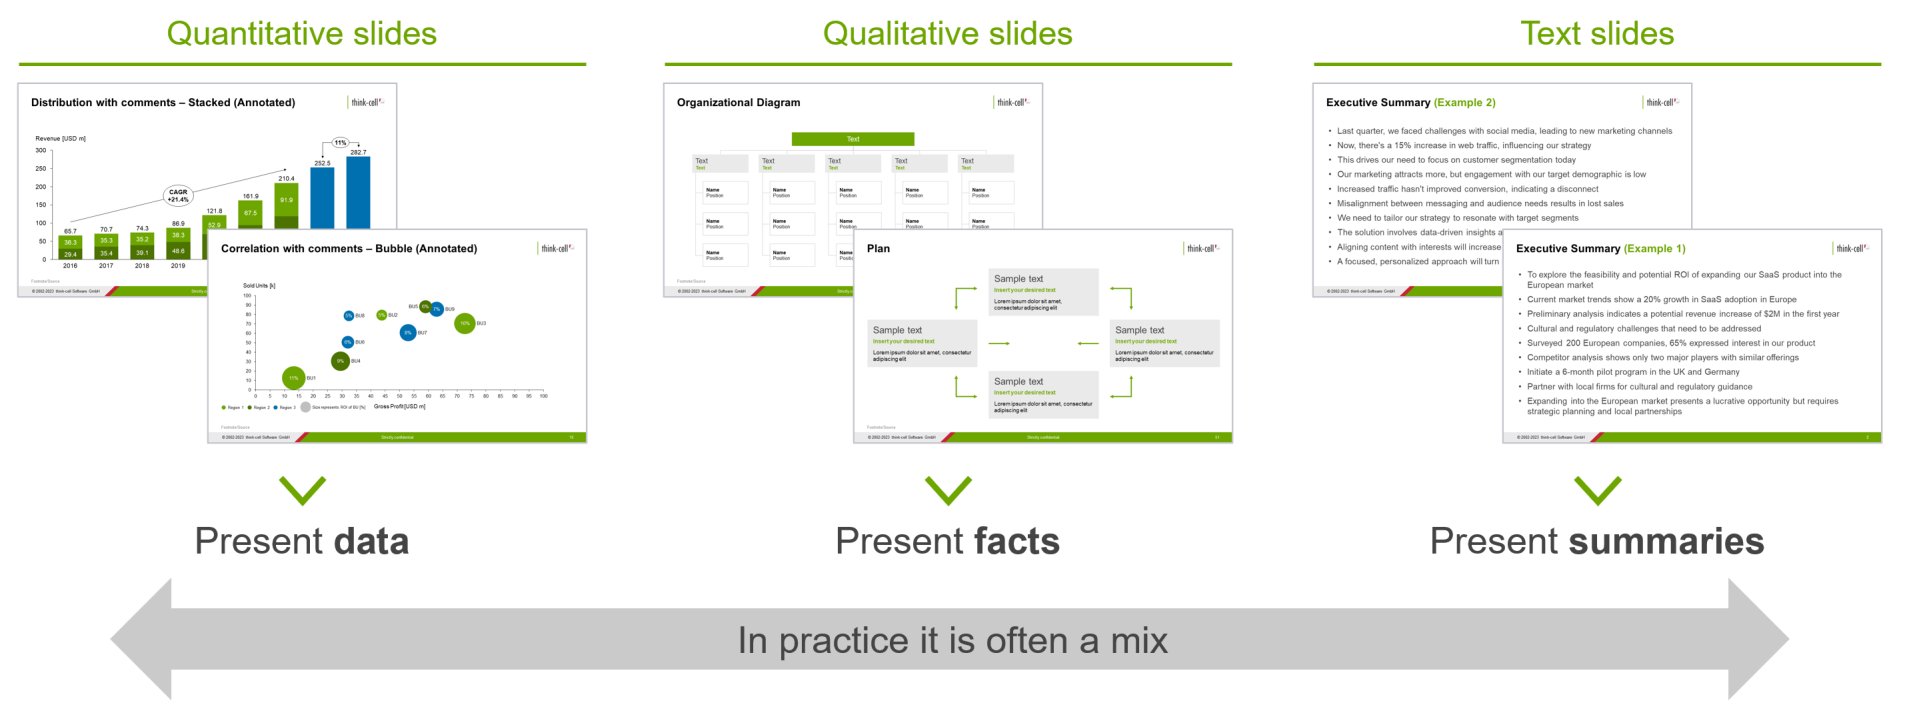 Qualitative, quantitative and text slide types in a presentation.